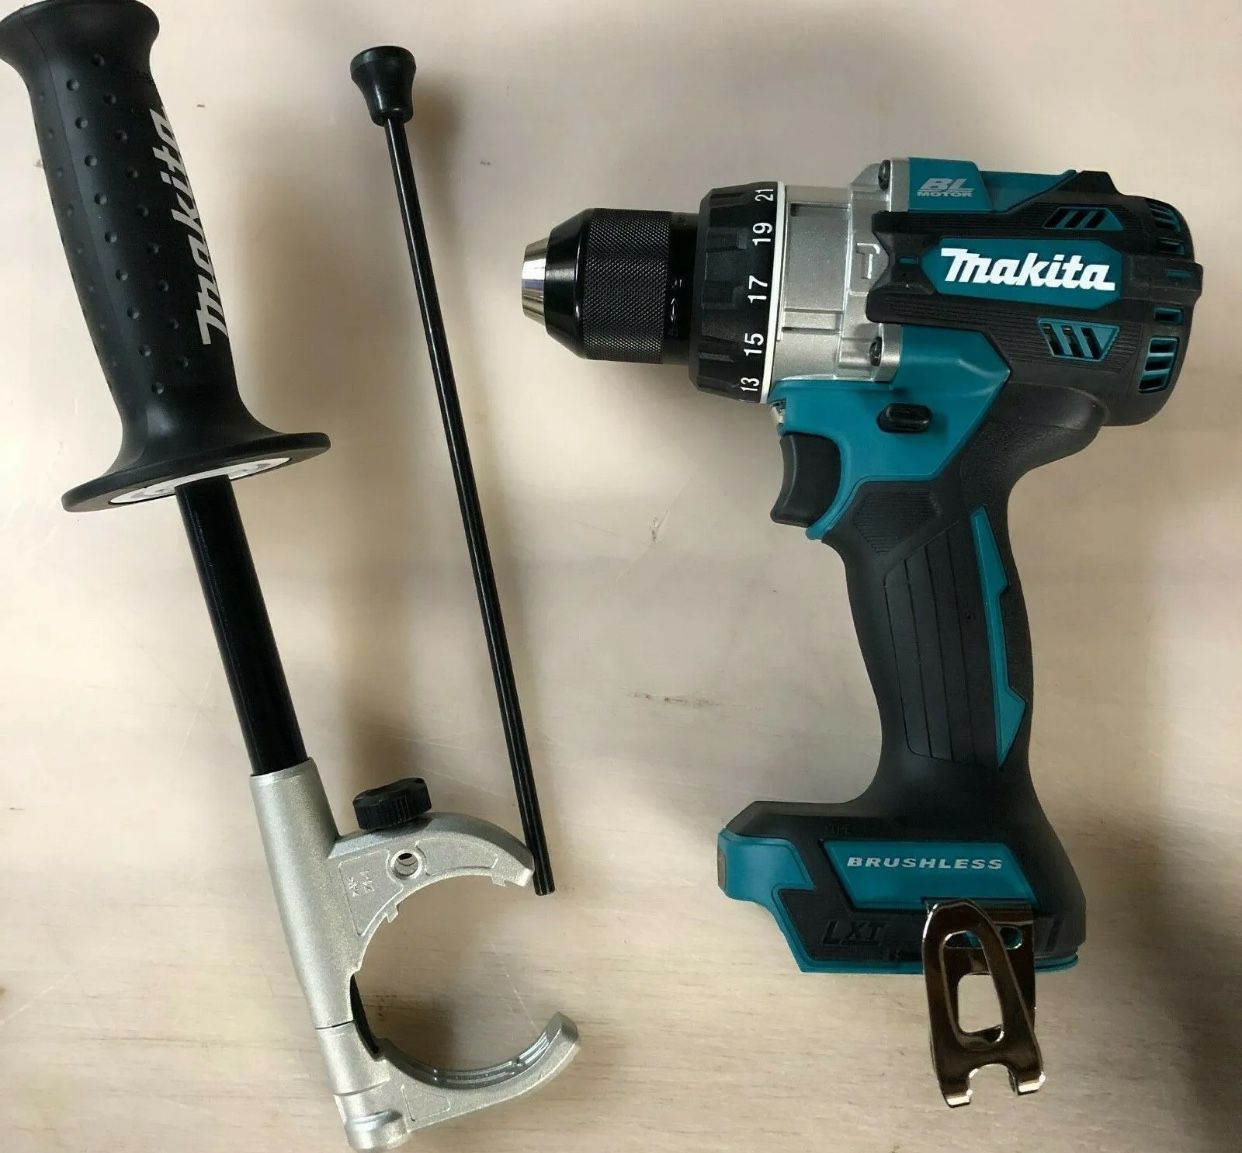 Makita New Hammer Drill -2 Speeds Brushless - No Battery 